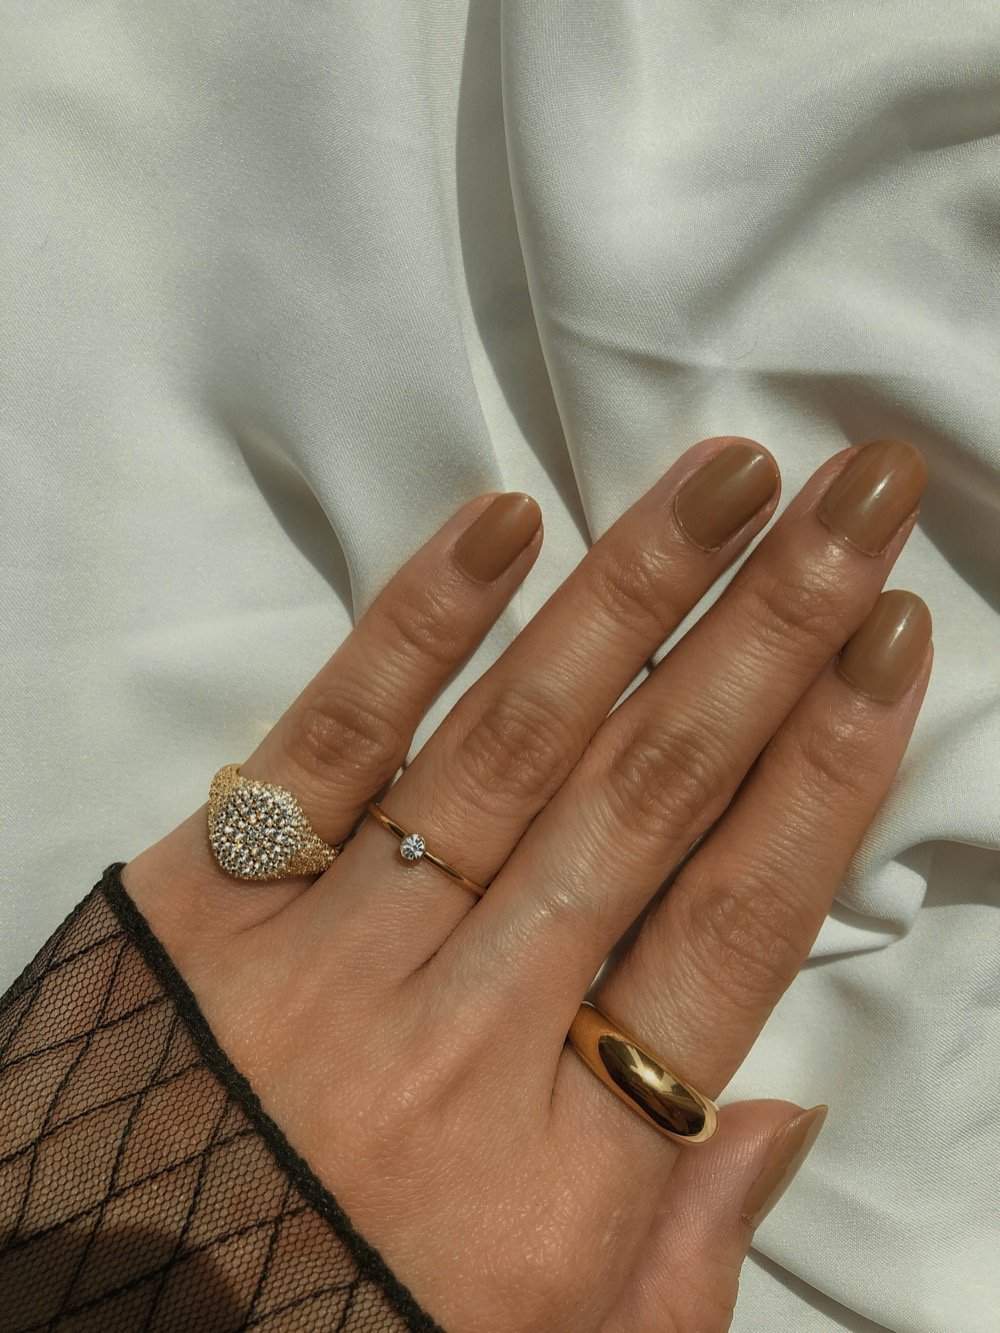 Black diamond signet ring for women-Arrow ring-Pinky custom engraved ring-Love  - Shop Majade Jewelry Design General Rings - Pinkoi